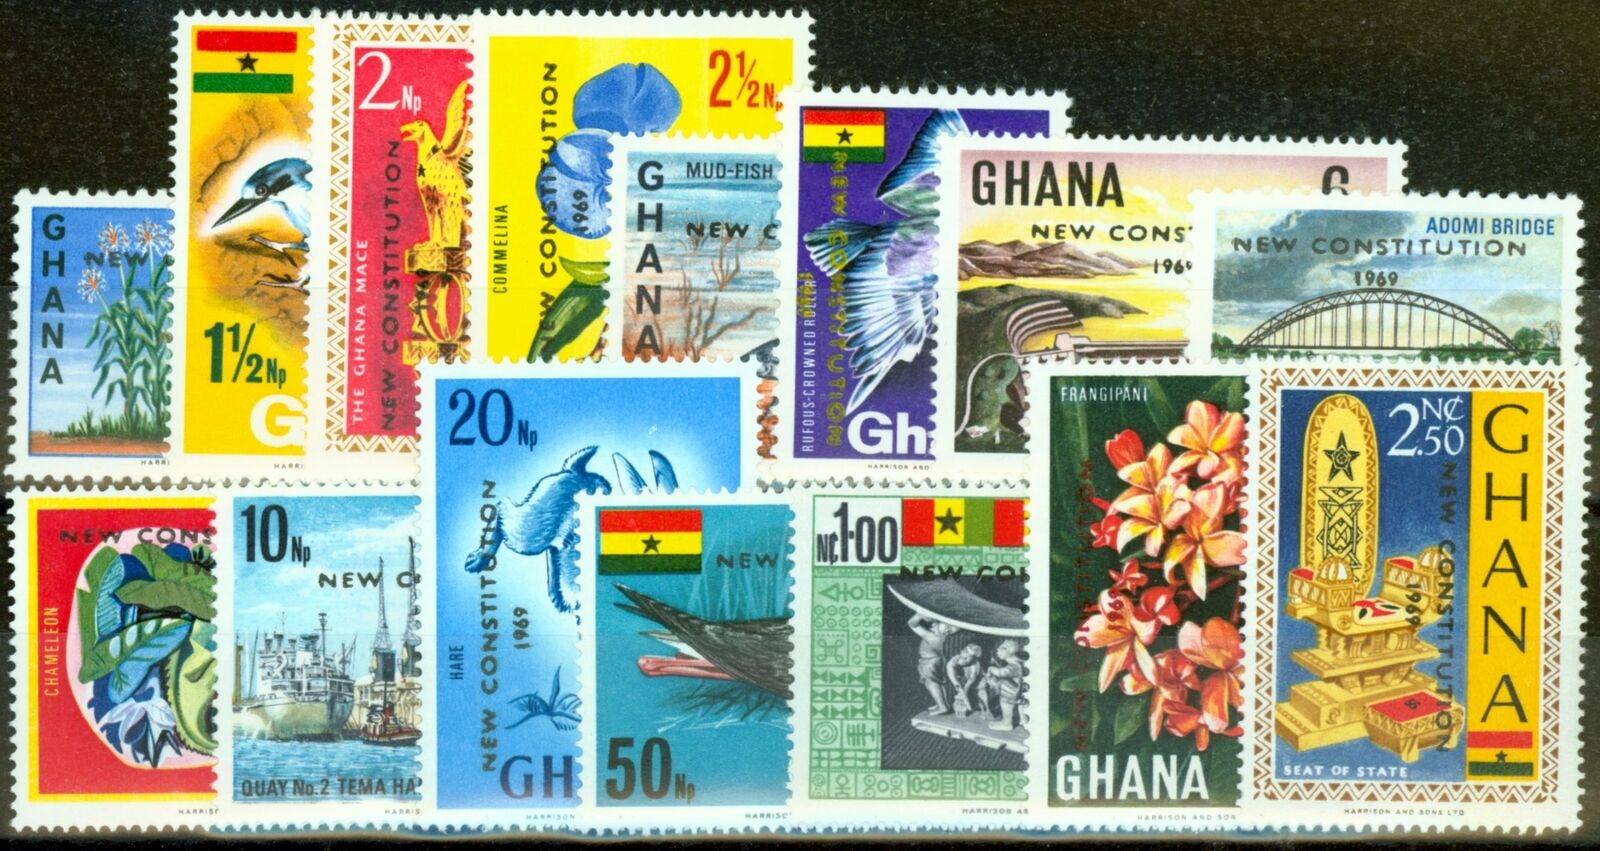 Ghana 1969 - Constitutia, supratipar, serie neuzata